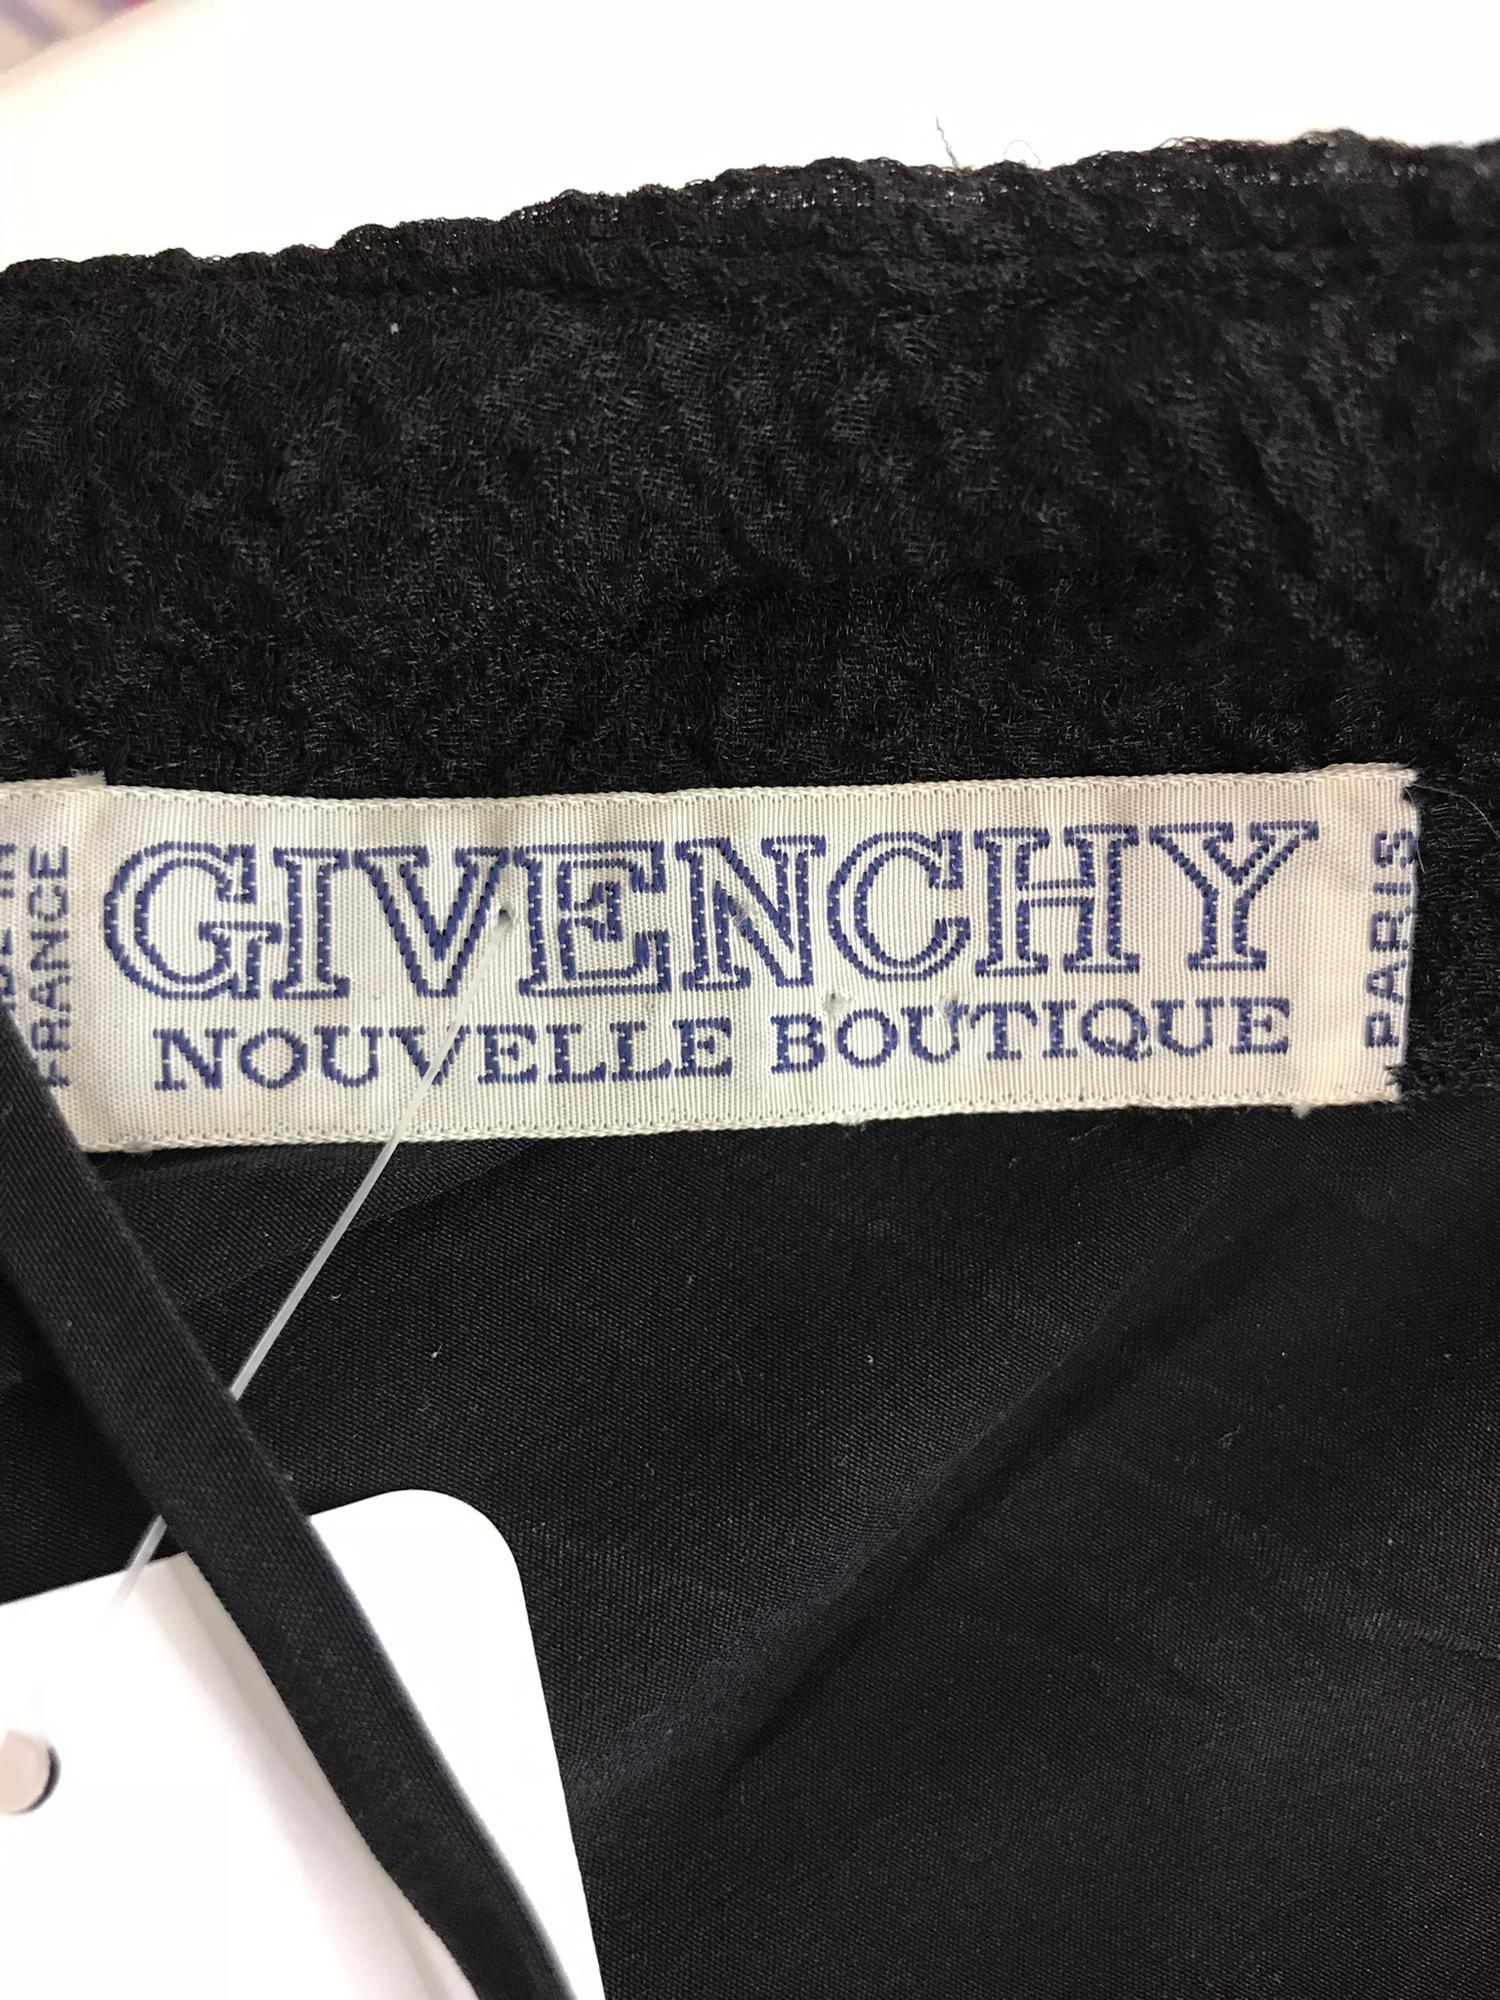 Givenchy black matelassé silk one shoulder cocktail dress 1990s 10